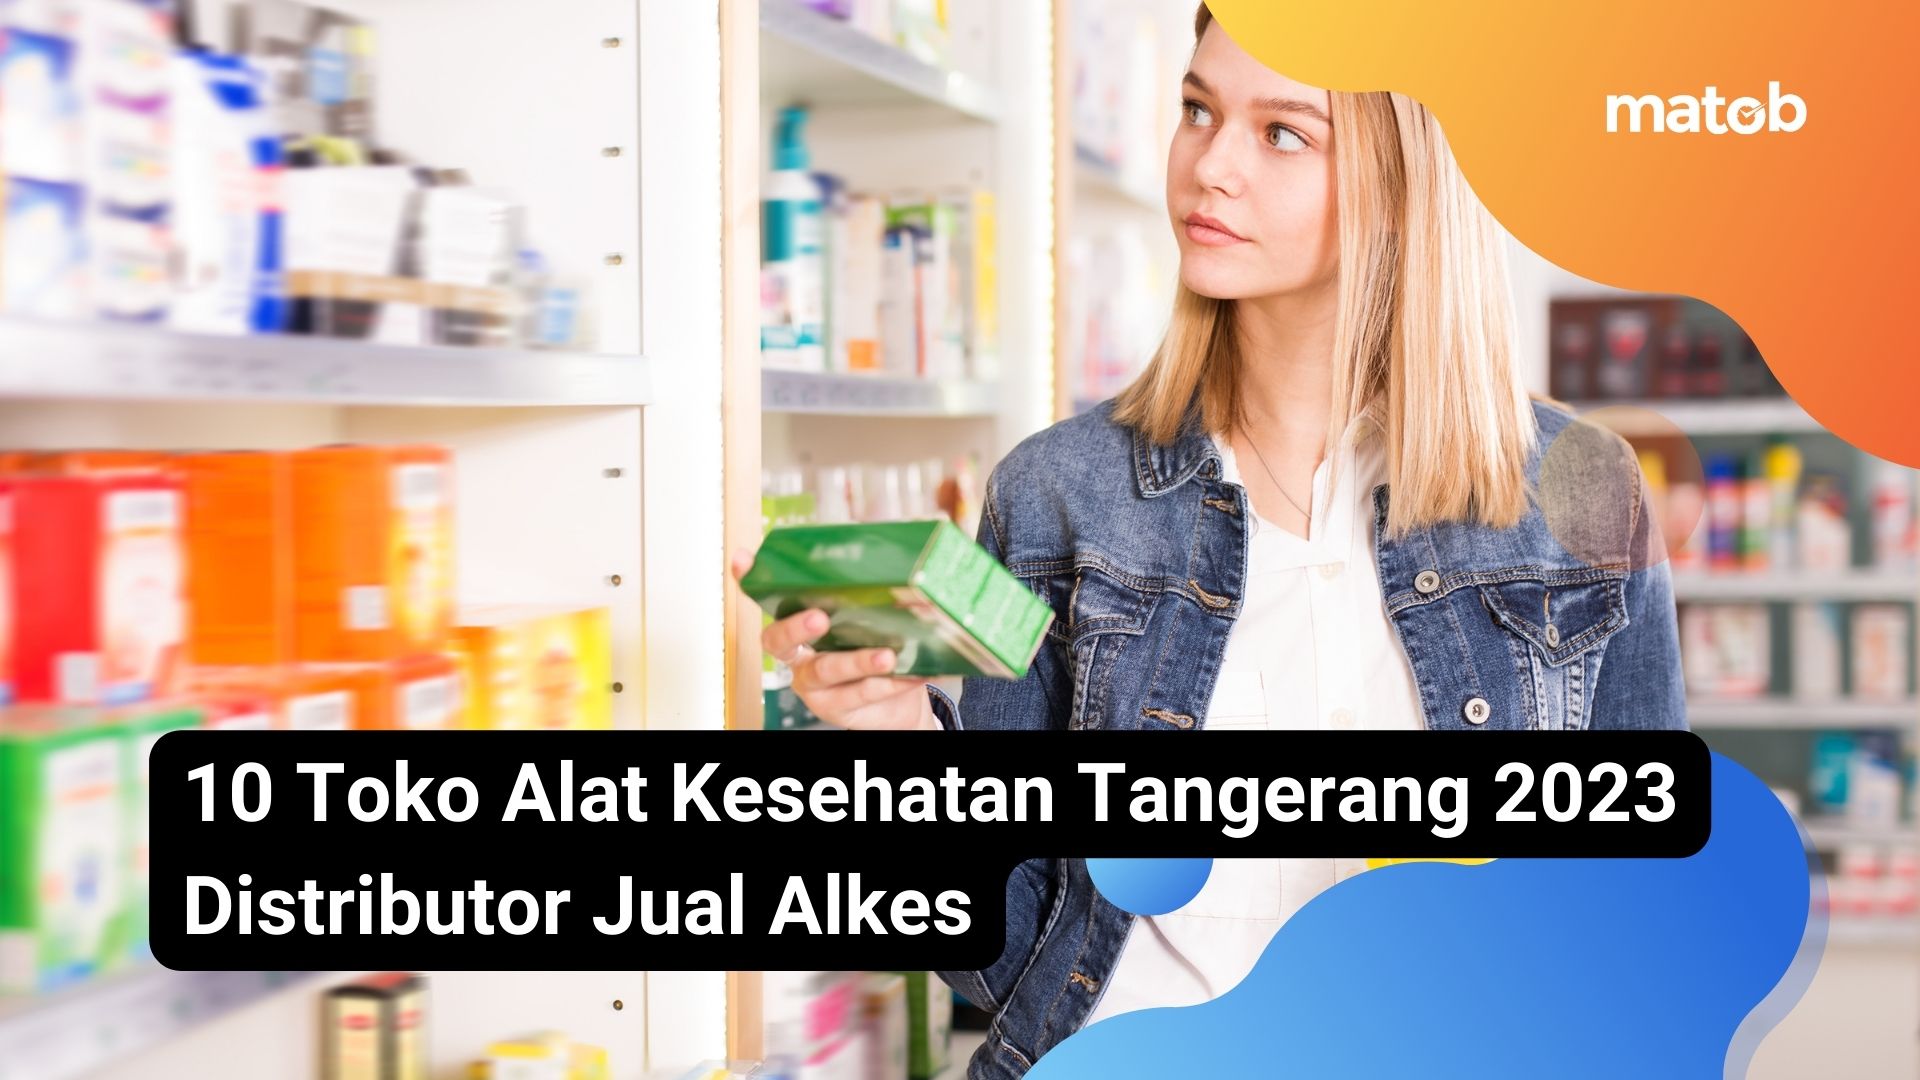 10 Toko Alat Kesehatan Tangerang 2023 Distributor Jual Alkes